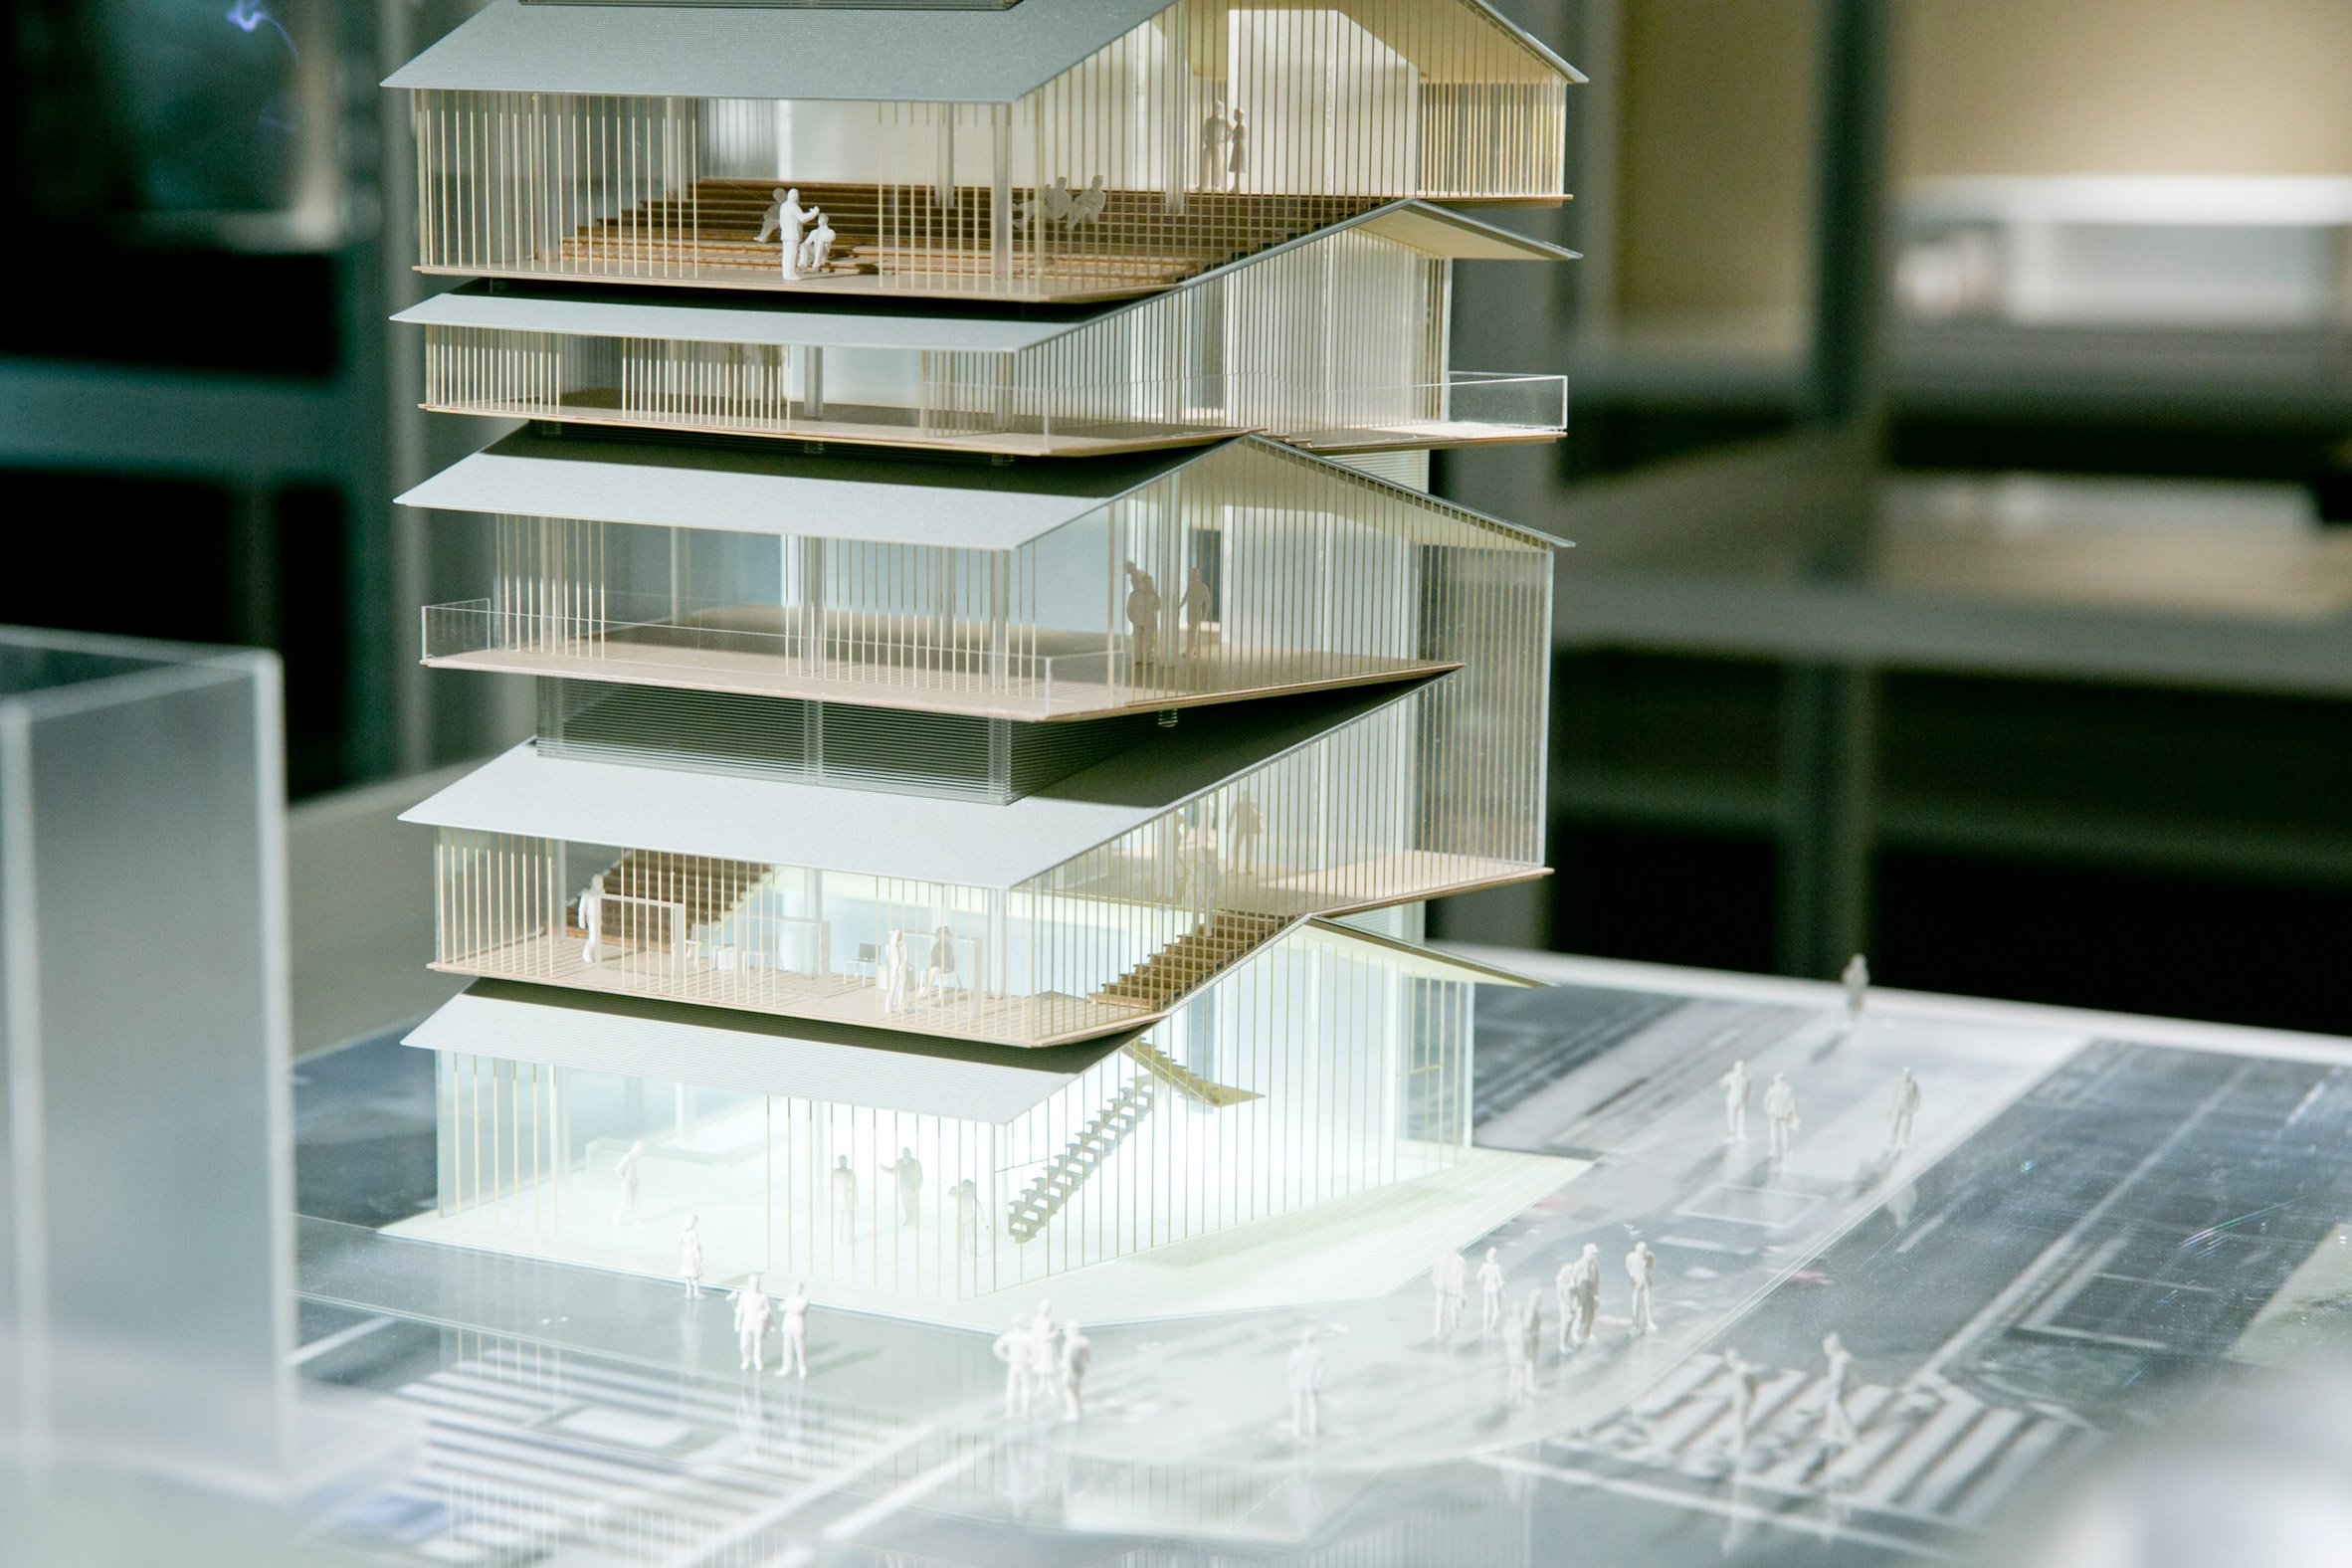 kengo-kuma-archi-depot-five-top-architectural-models-architecture_dezeen_2364_col_0